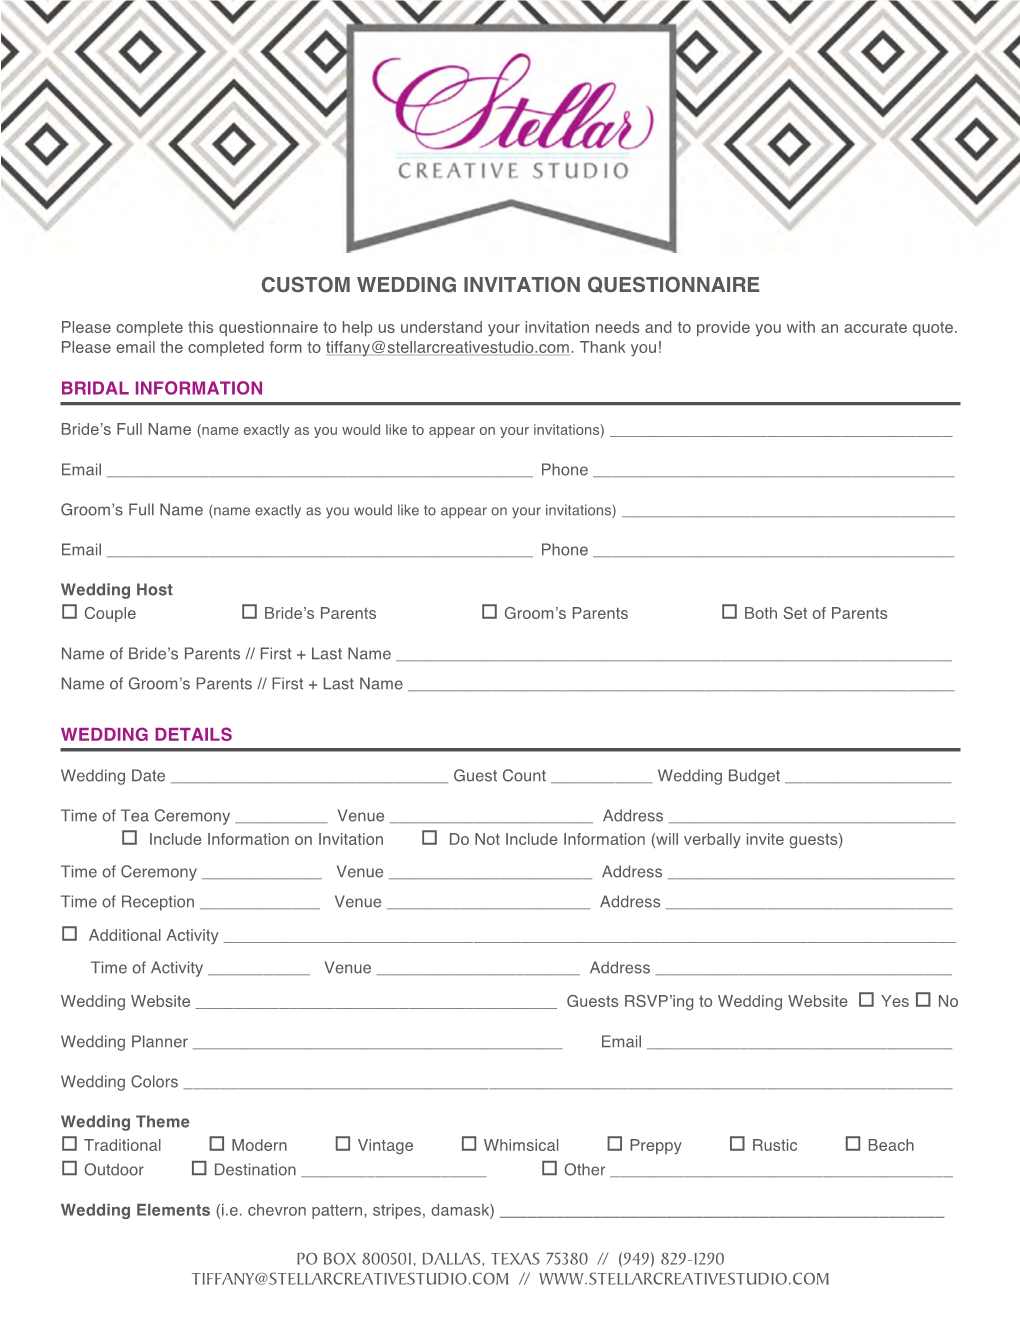 ! Custom Wedding Invitation Questionnaire